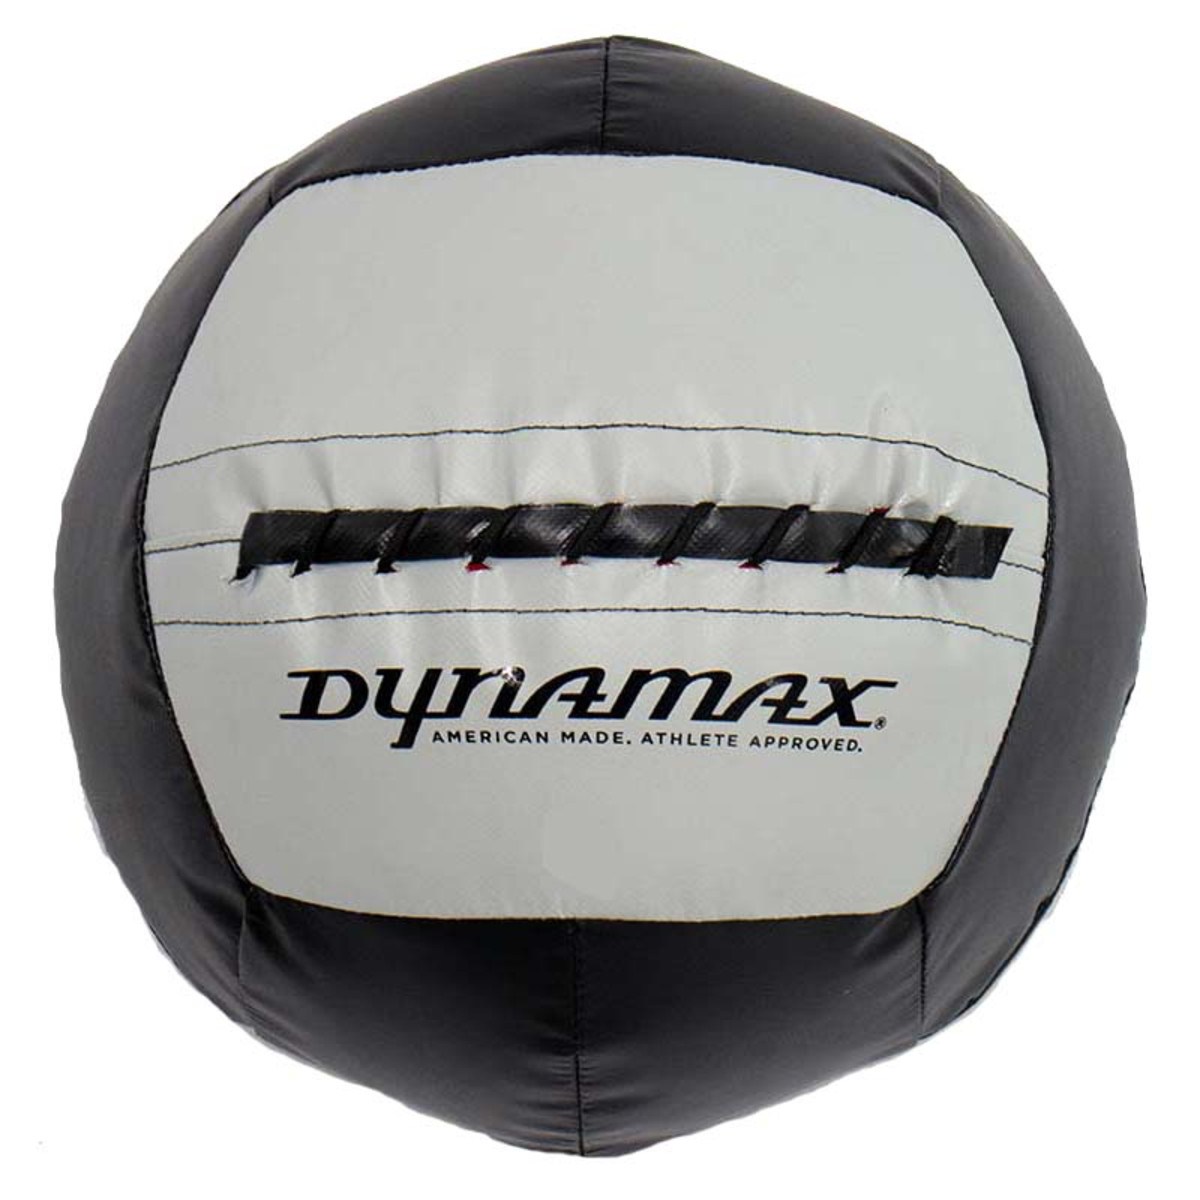 Dynamax Medicine Ball Image 10